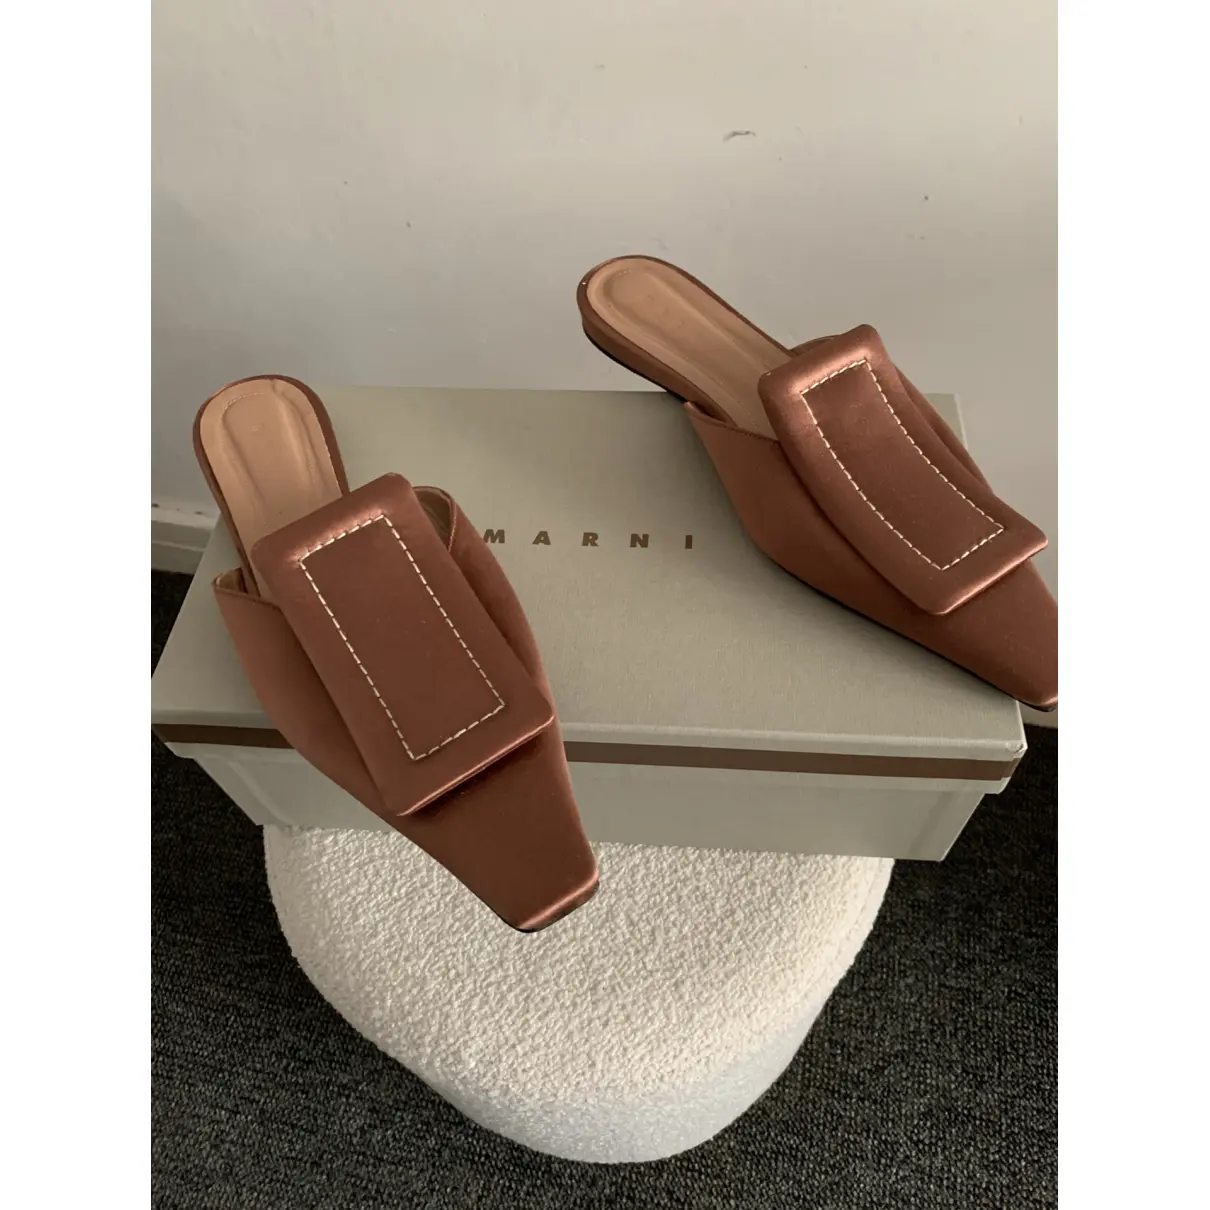 Buy Marni Cloth sandals online